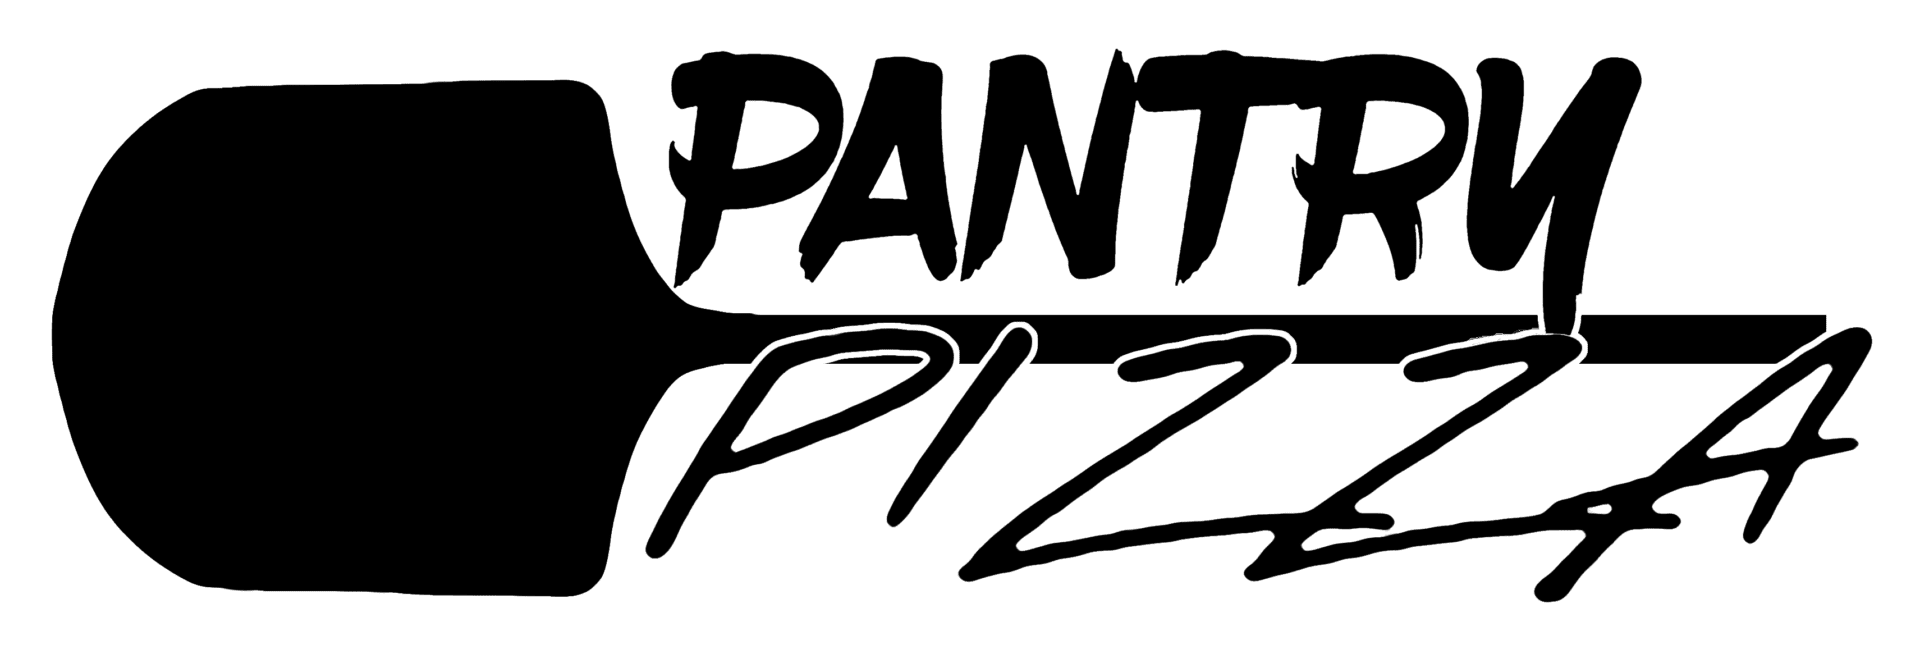 Pizza Pantry